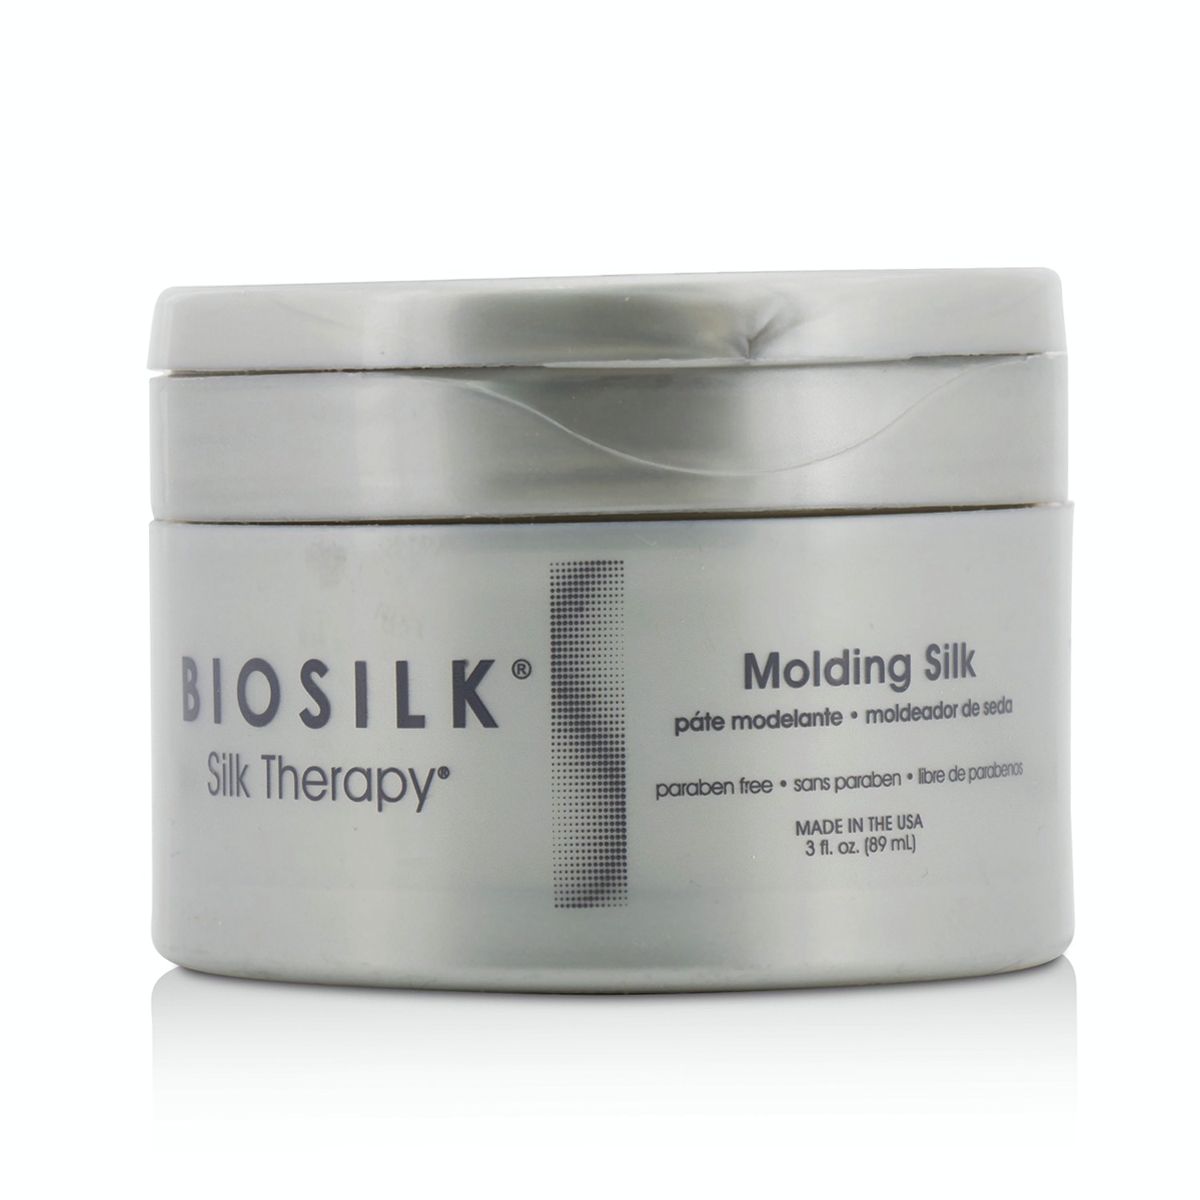 Silk Therapy Molding Silk (Medium Hold Low Shine) BioSilk Image